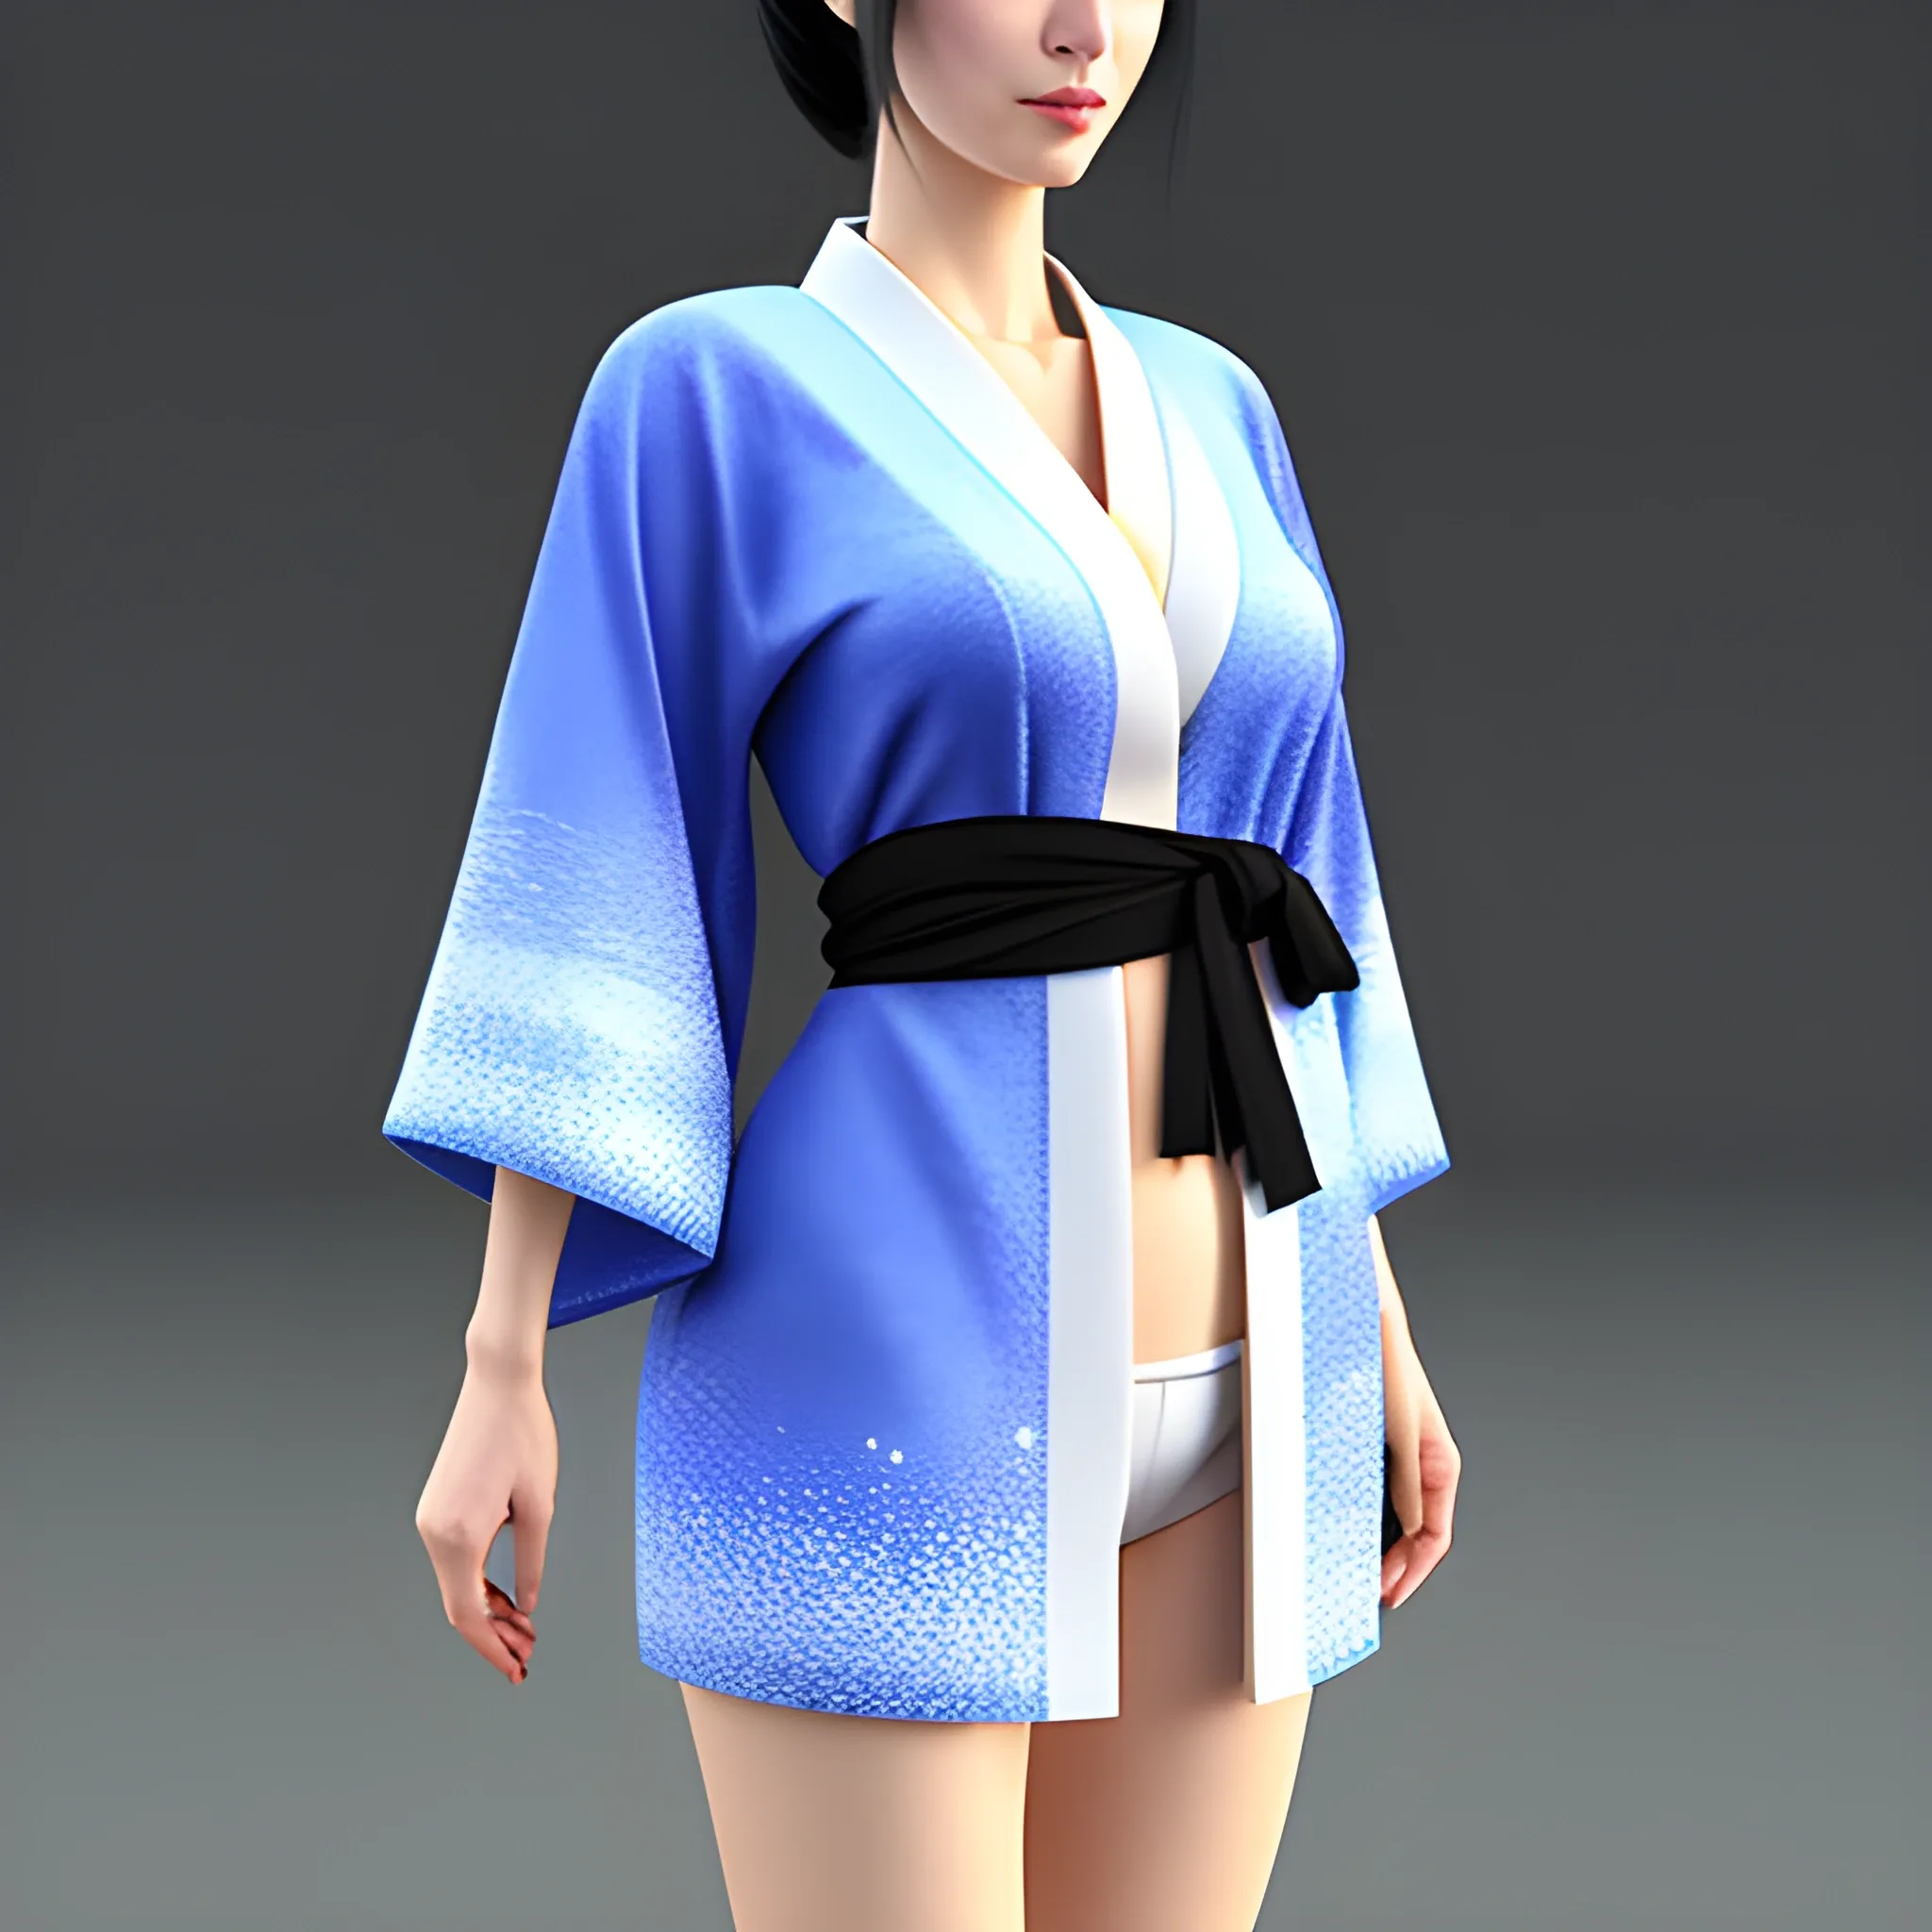 sweet asian girl on a short kimono, 3D